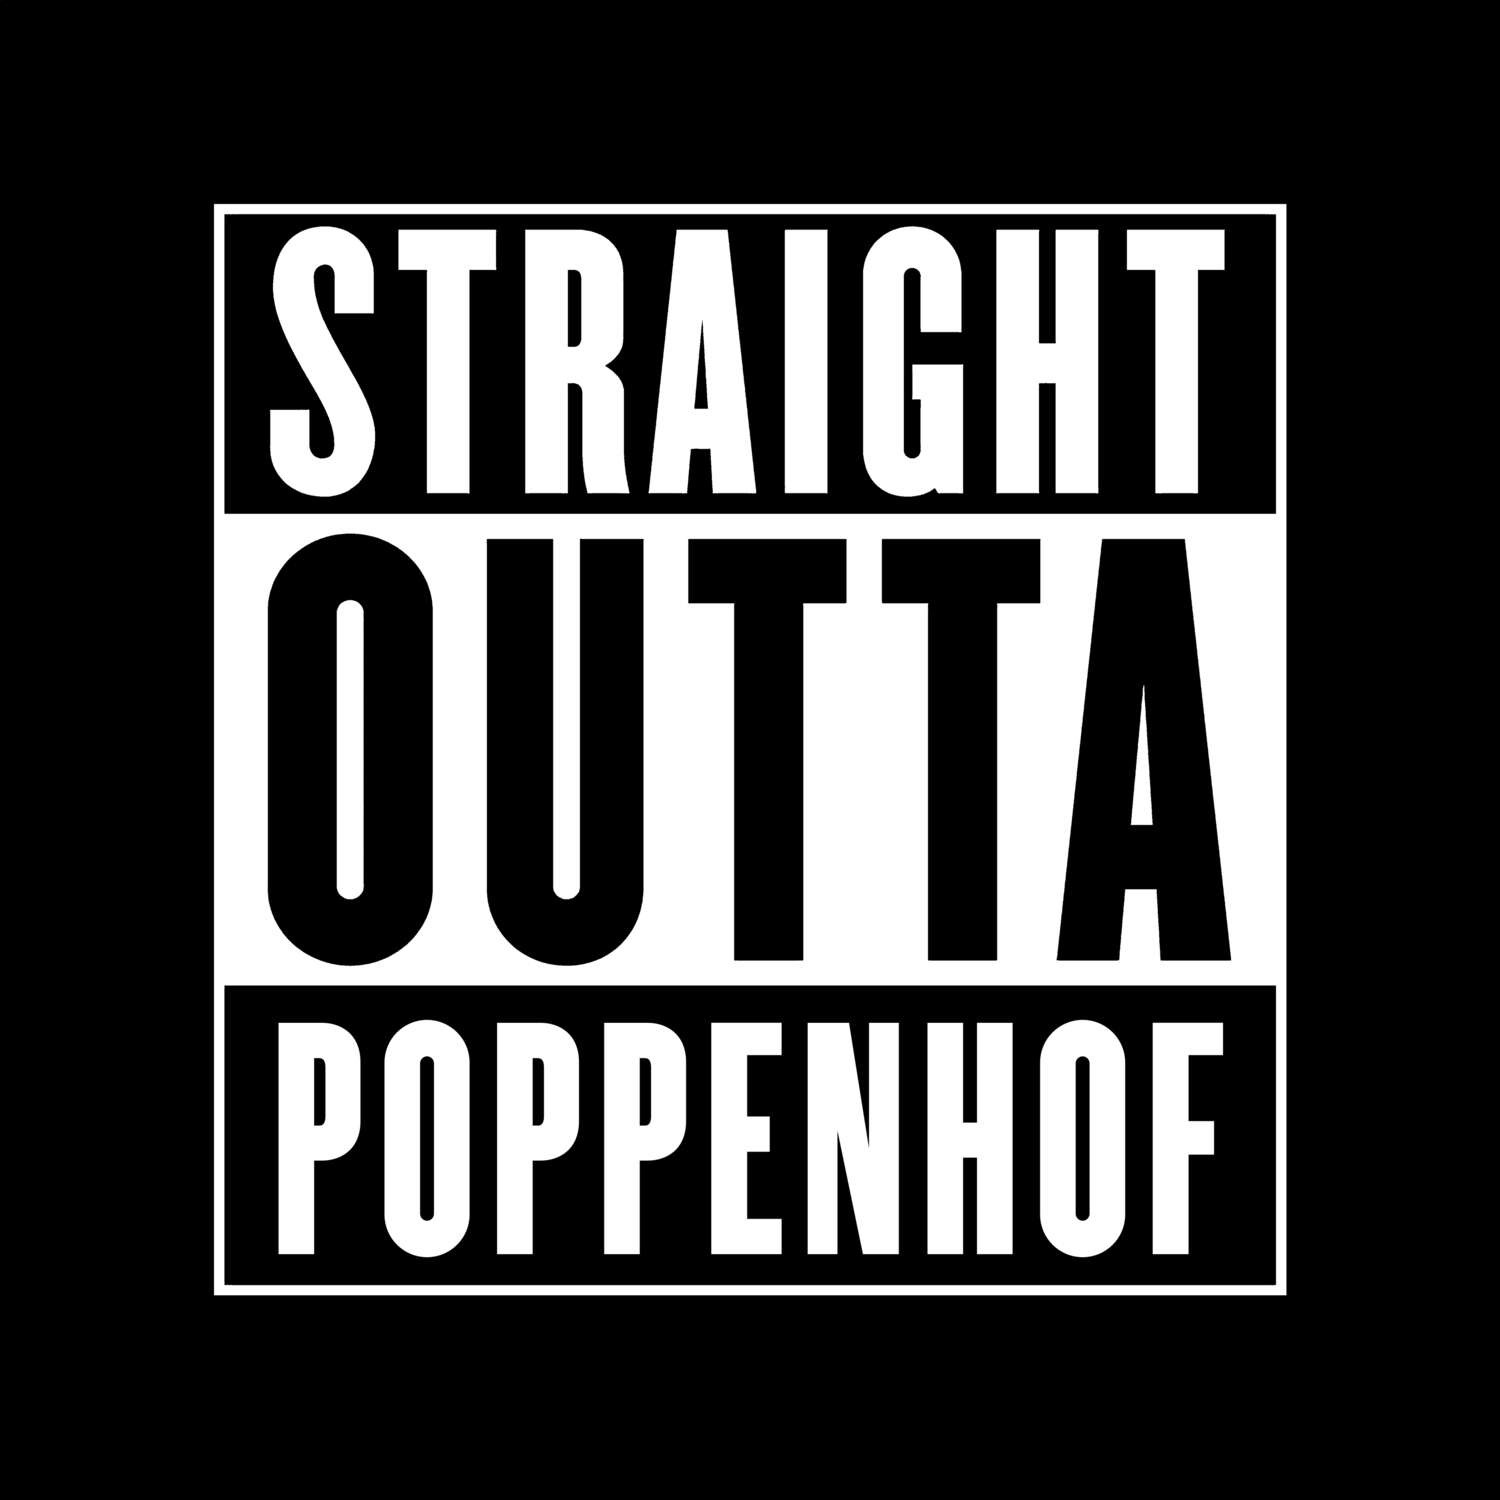 Poppenhof T-Shirt »Straight Outta«